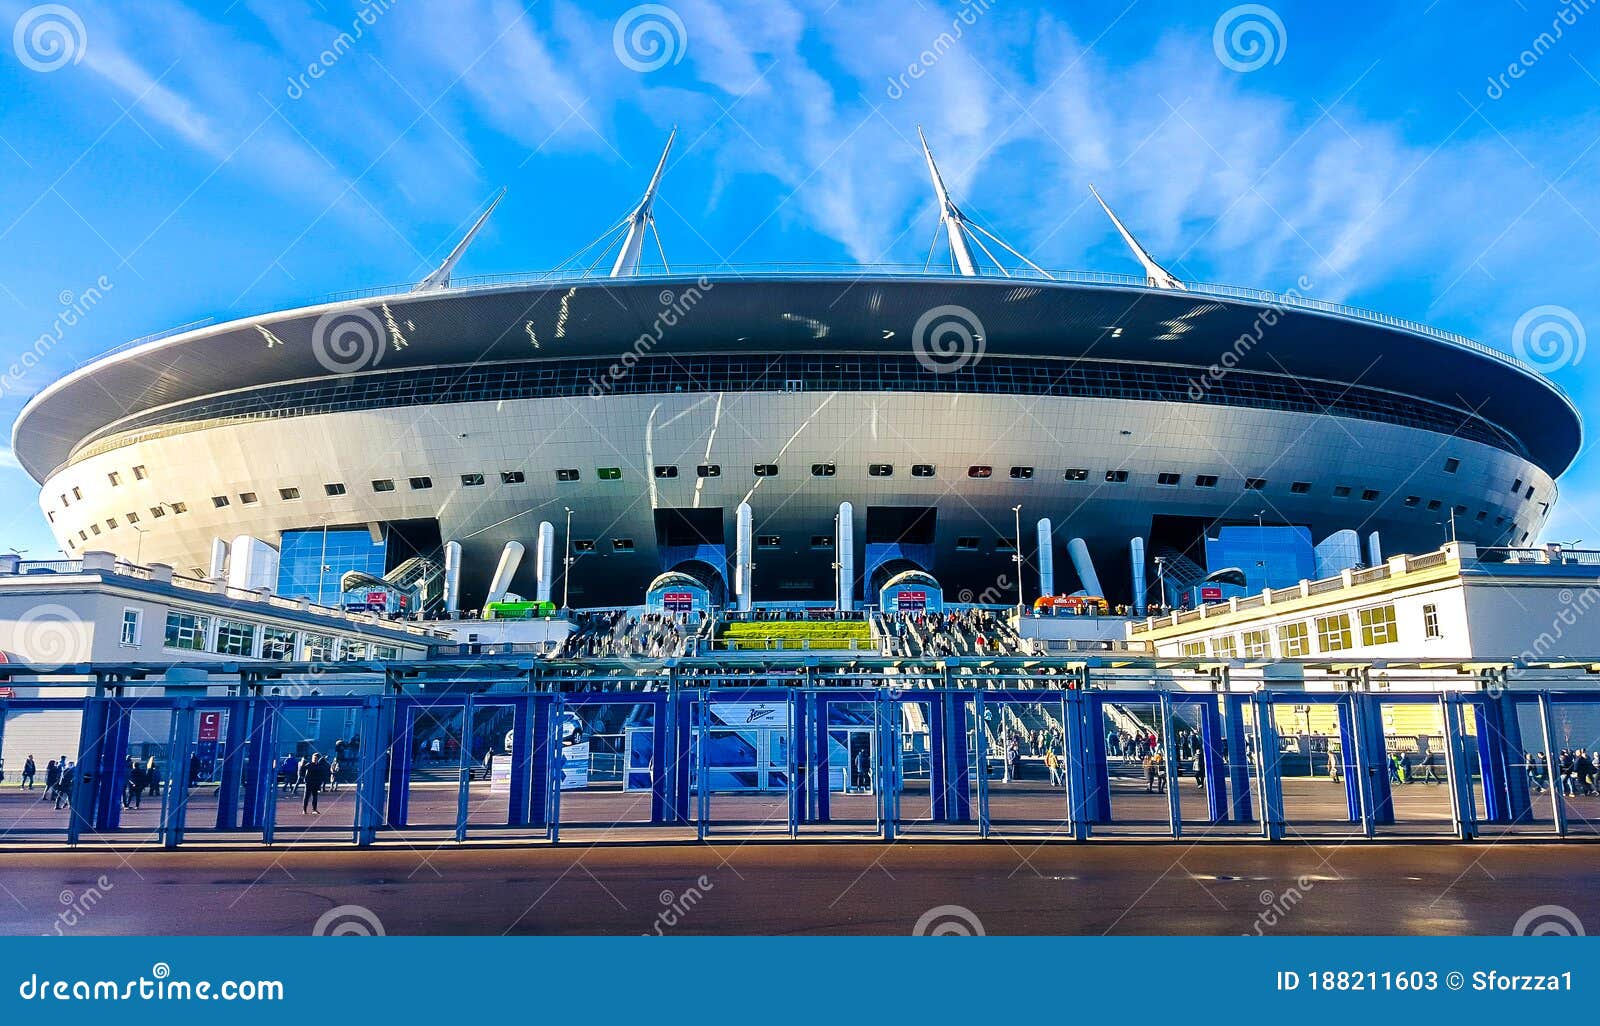 Stadium Gazprom Arena Home Stadium For Football Club Zenit St Petersburg Russia Editorial Stock Photo Image Of Petersburg Famous